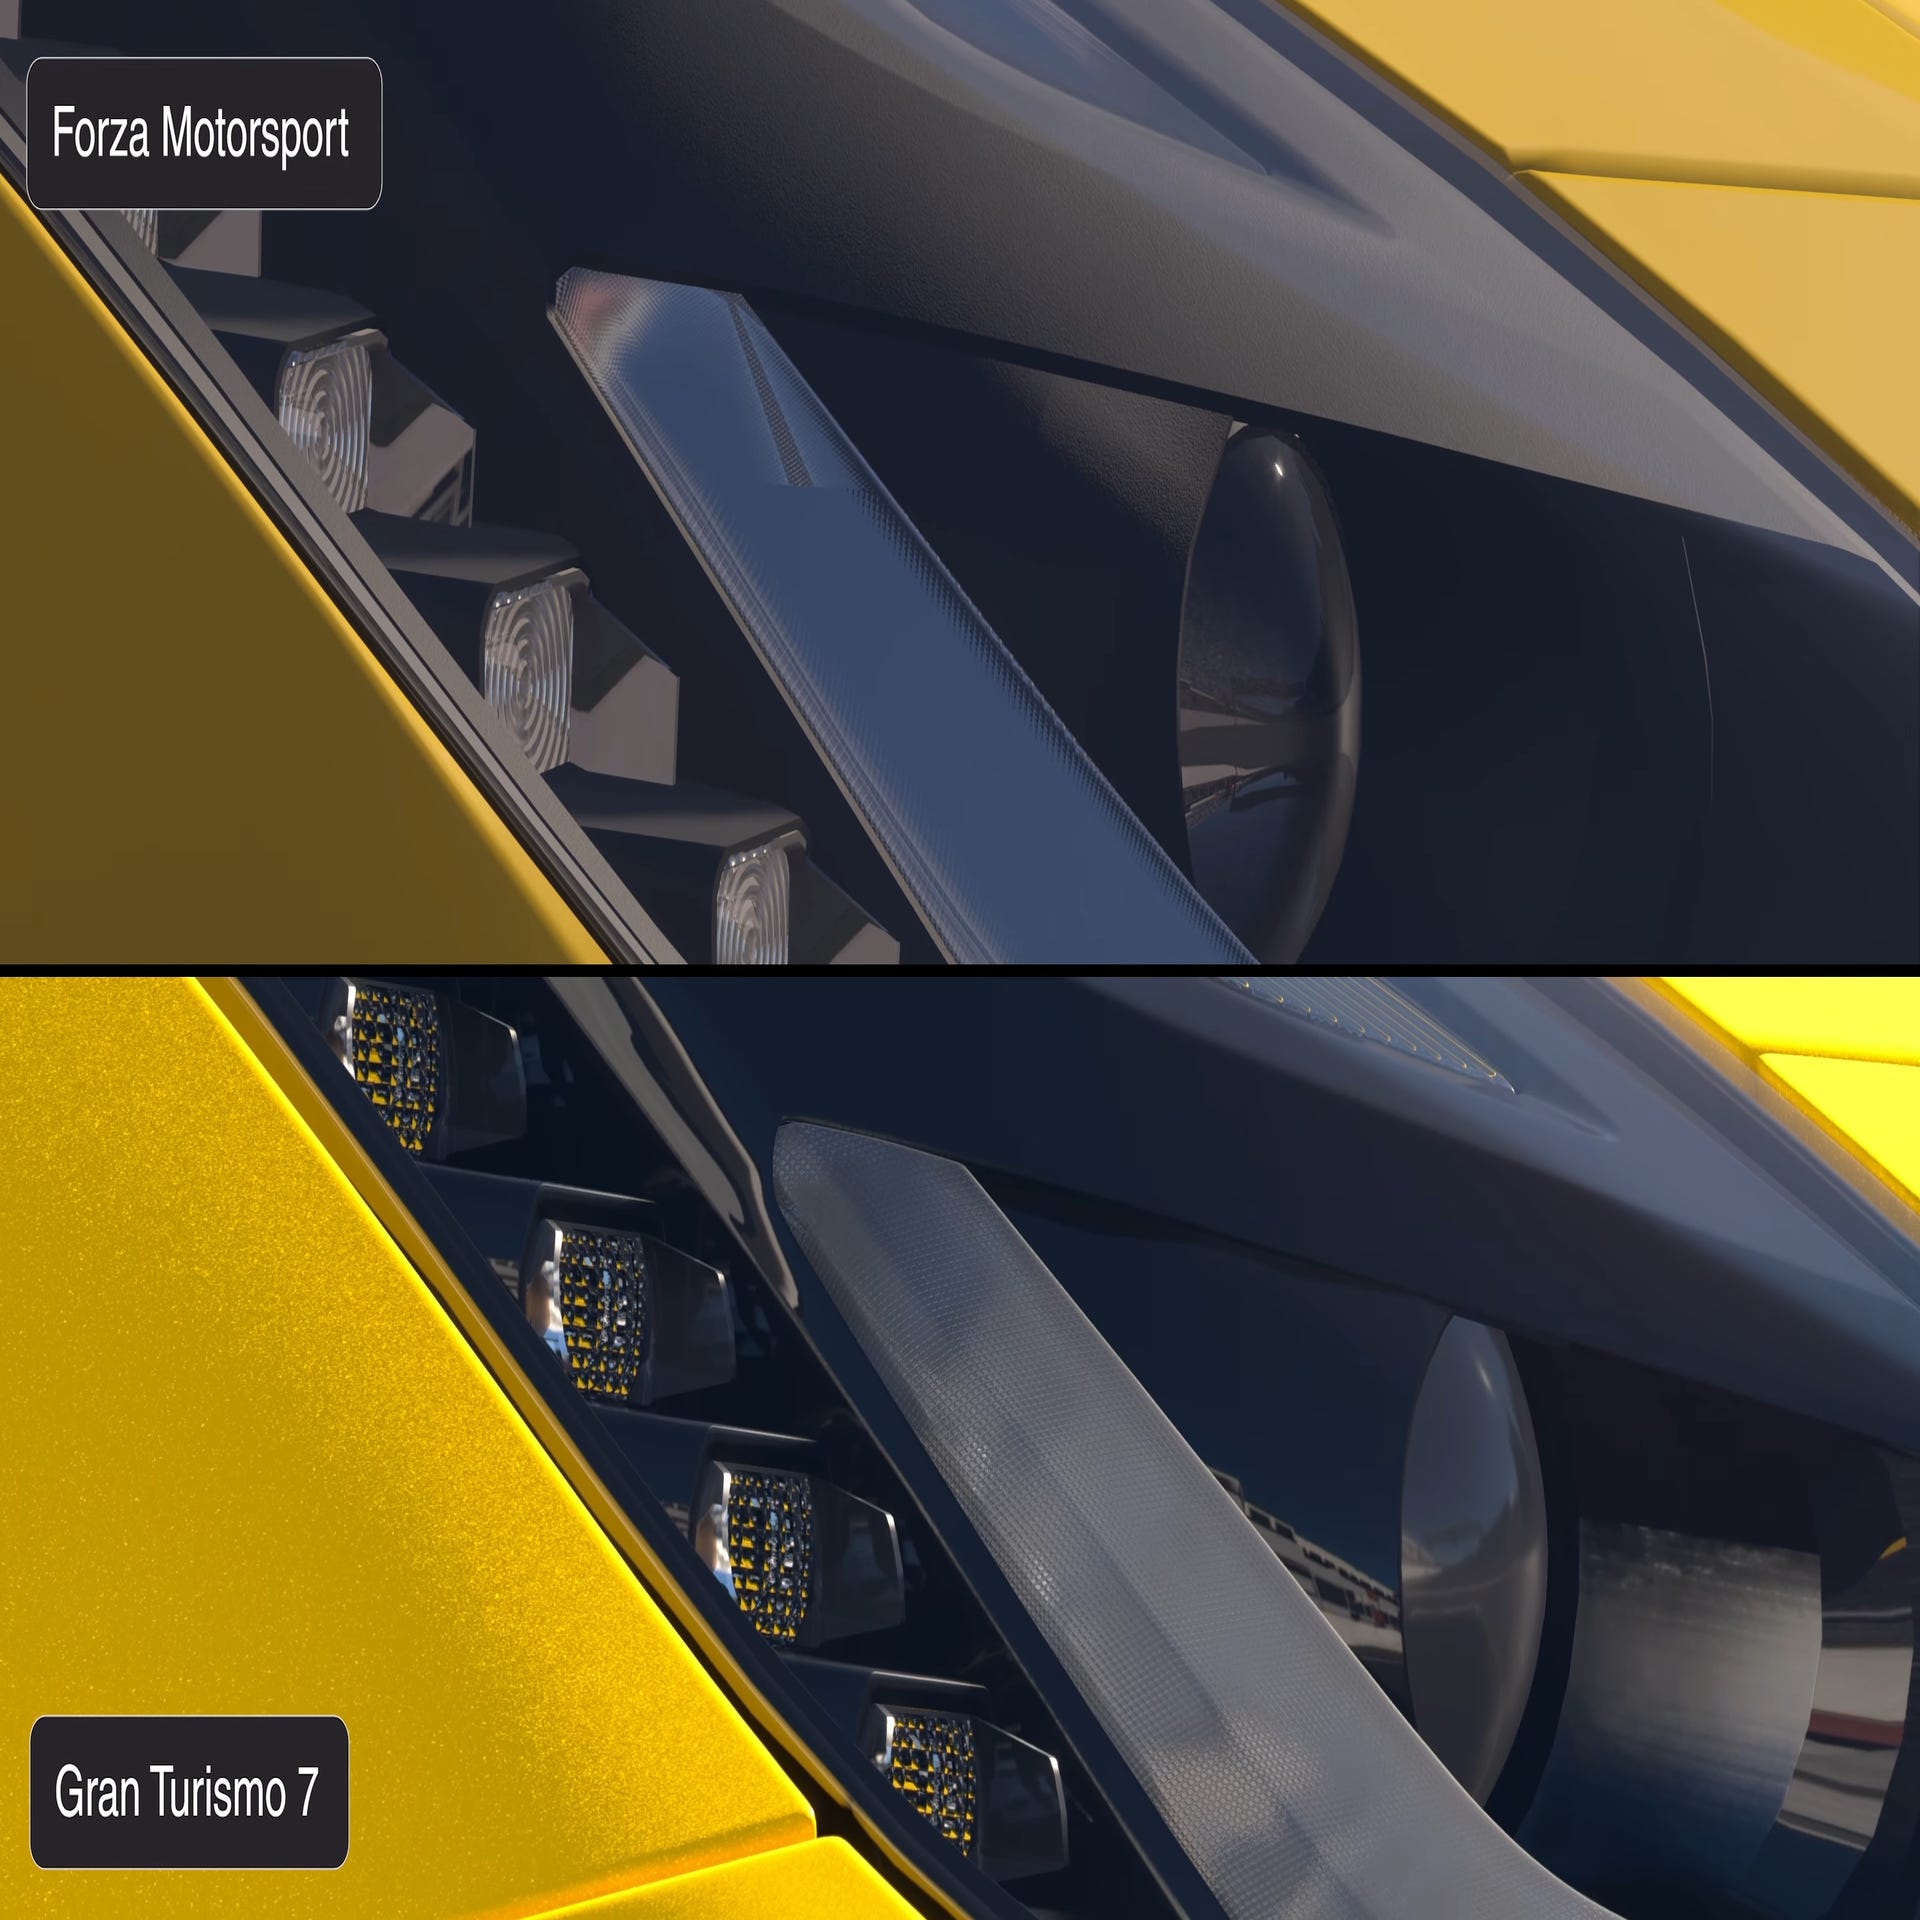 Vídeo compara visuais de Forza Motorsport 7 e Gran Turismo Sport